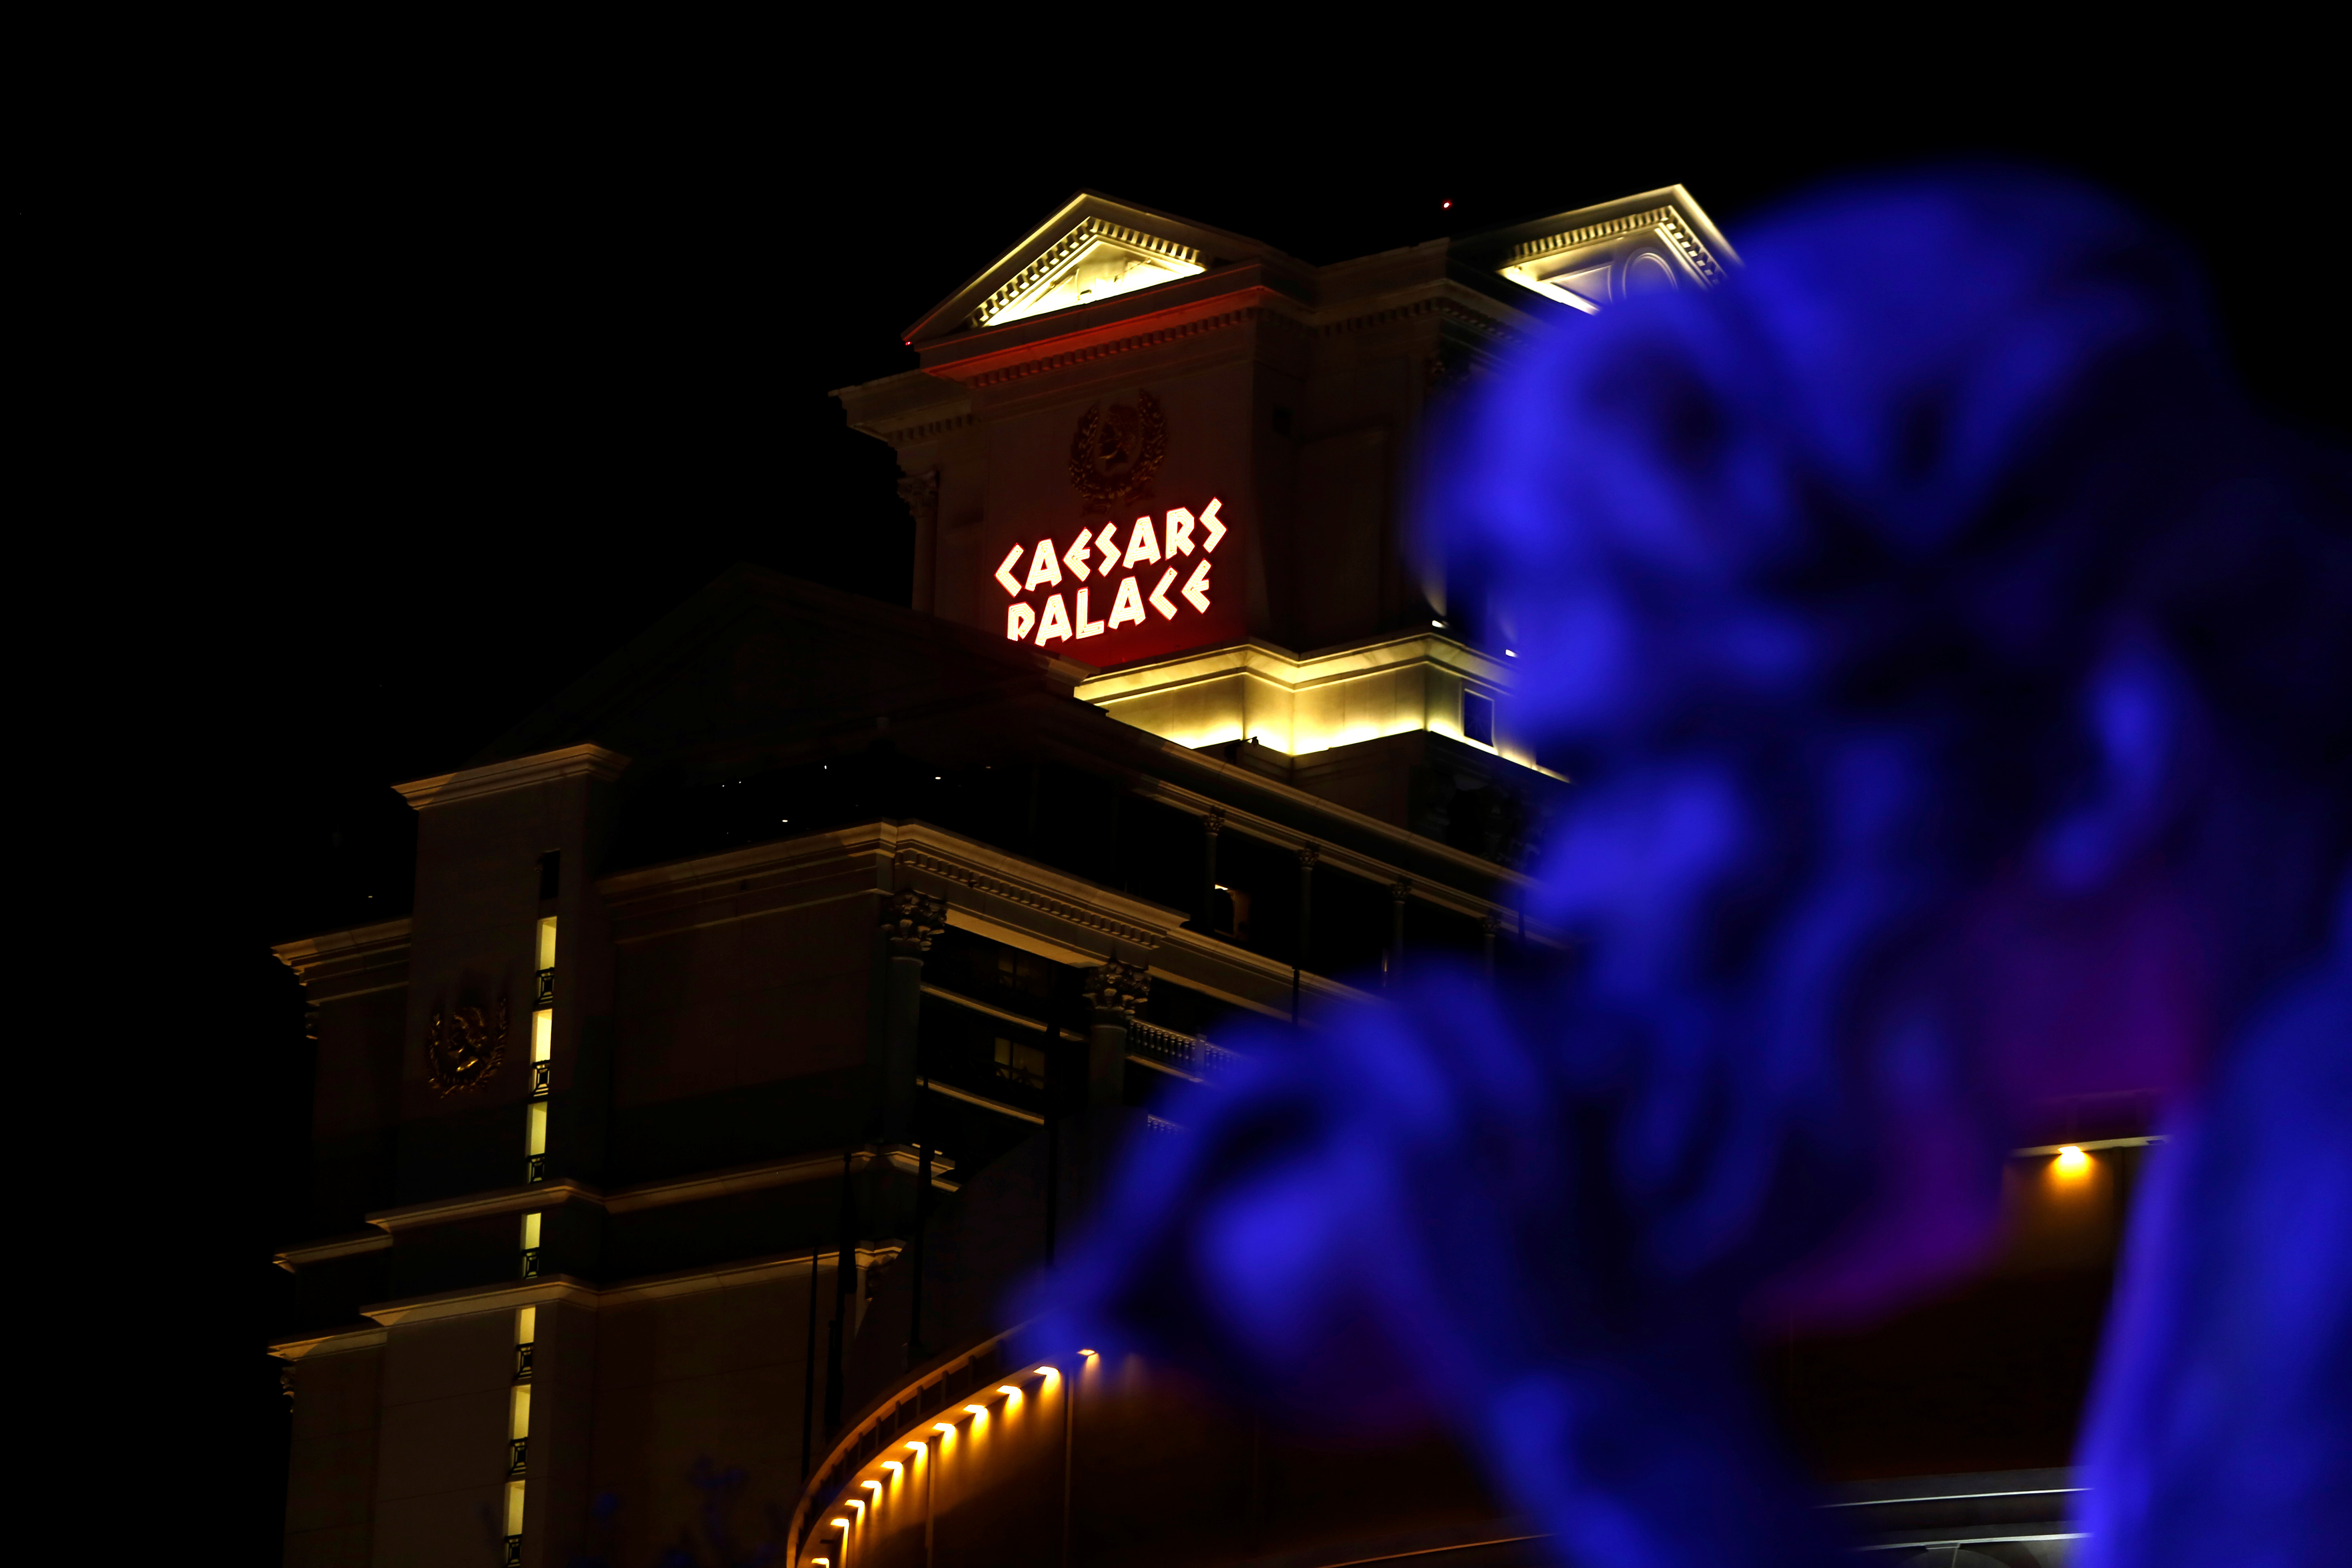 Caesars Palace Las Vegas Hotel and Casino is seen on the Las Vegas Strip in Las Vegas